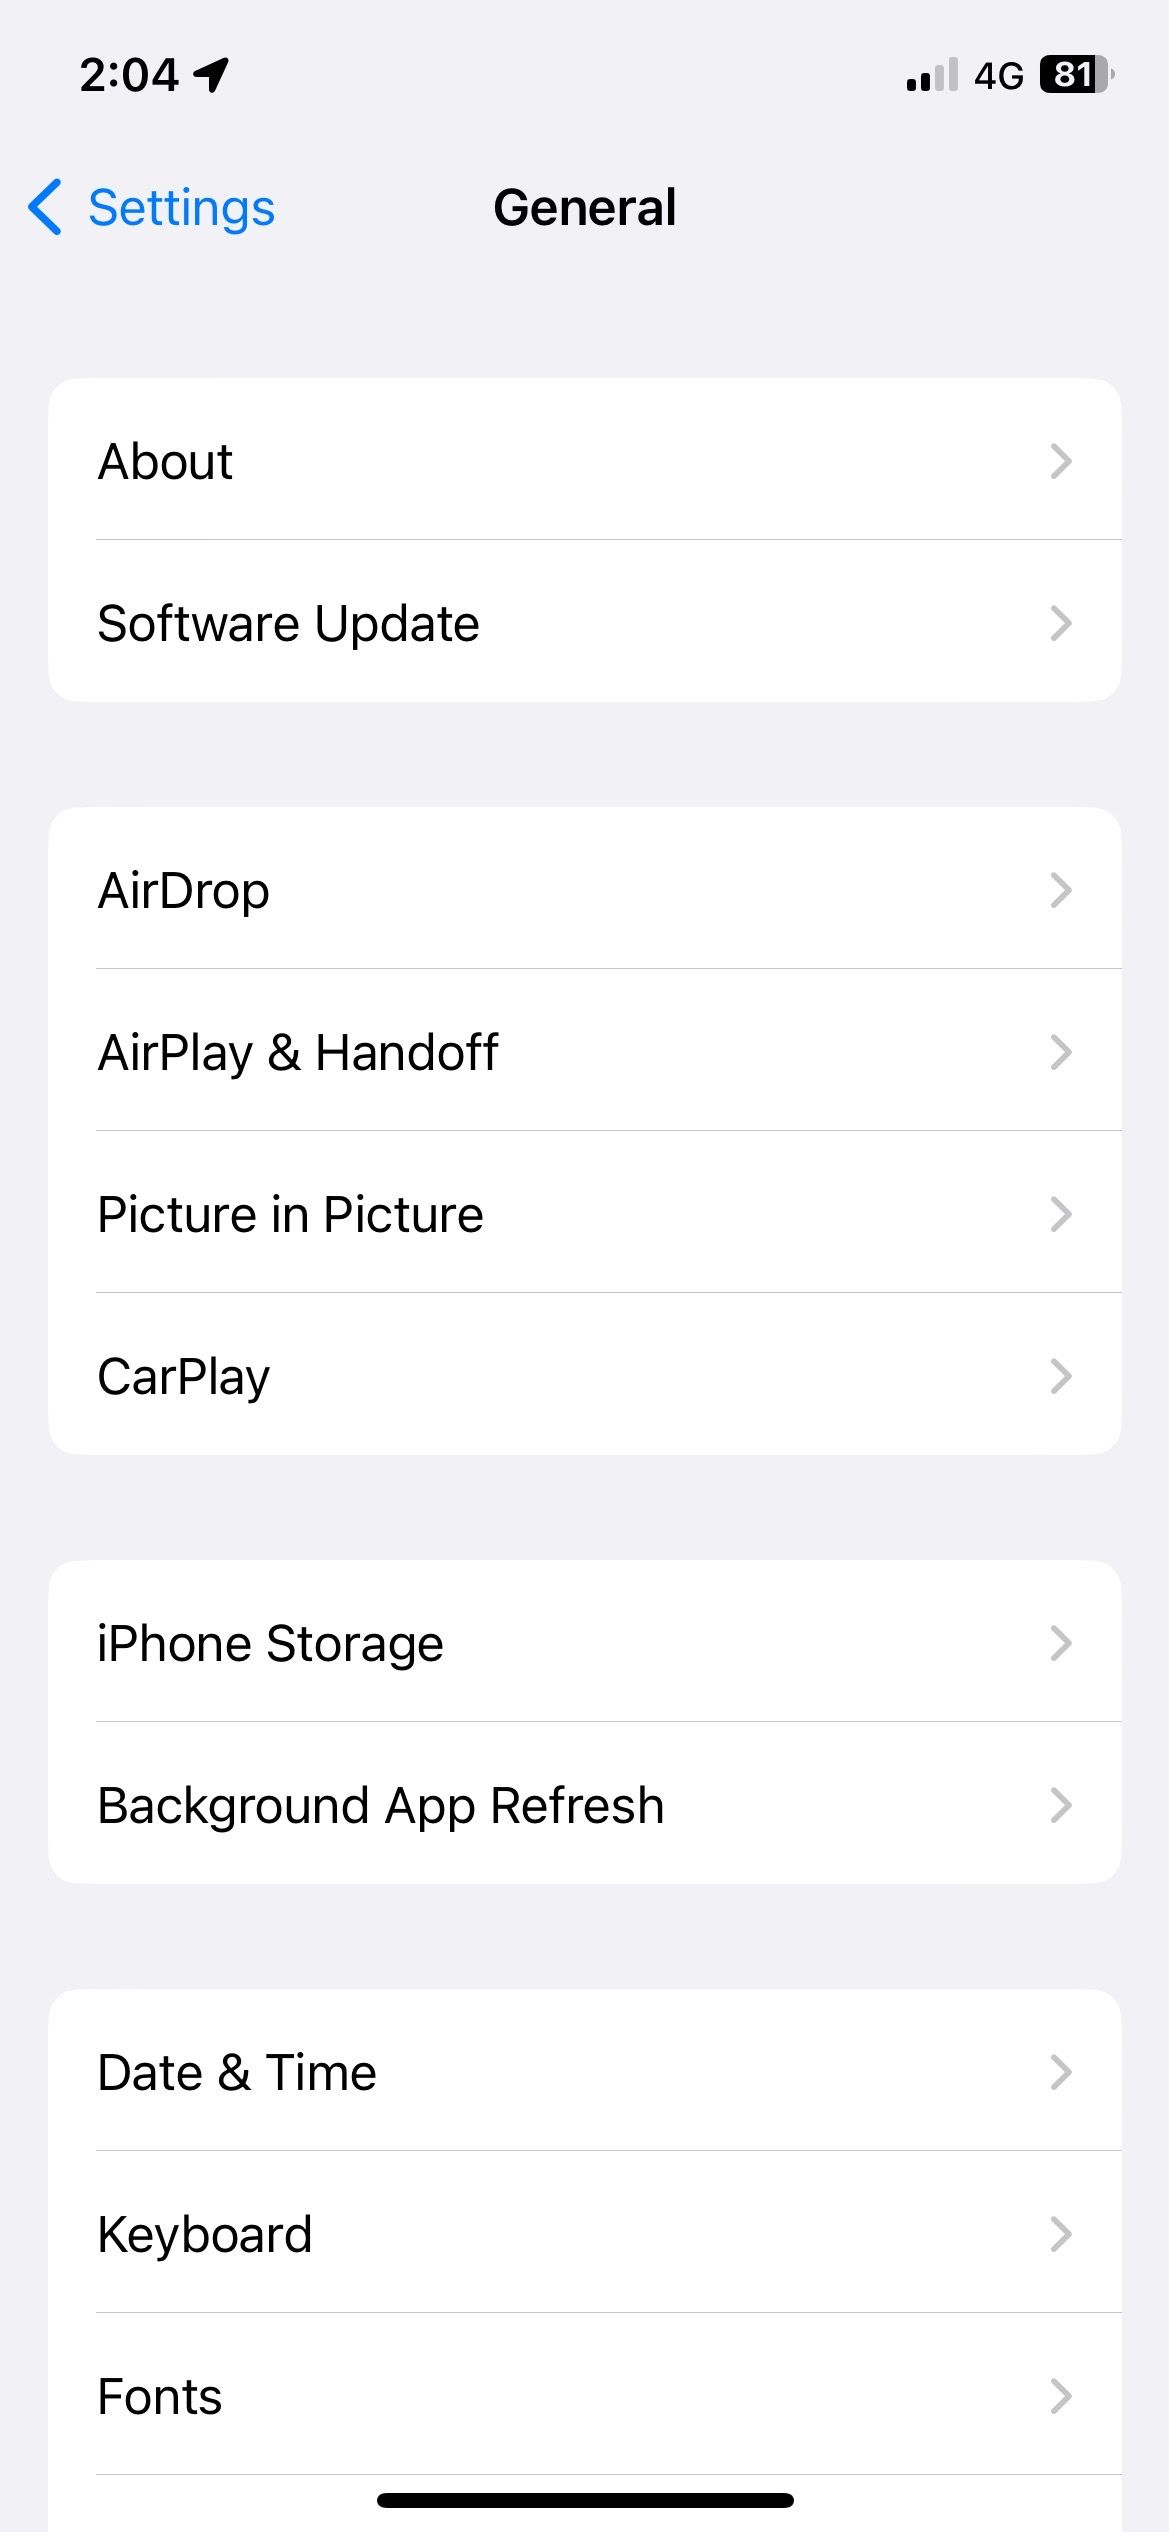 Tap iPhone Storage